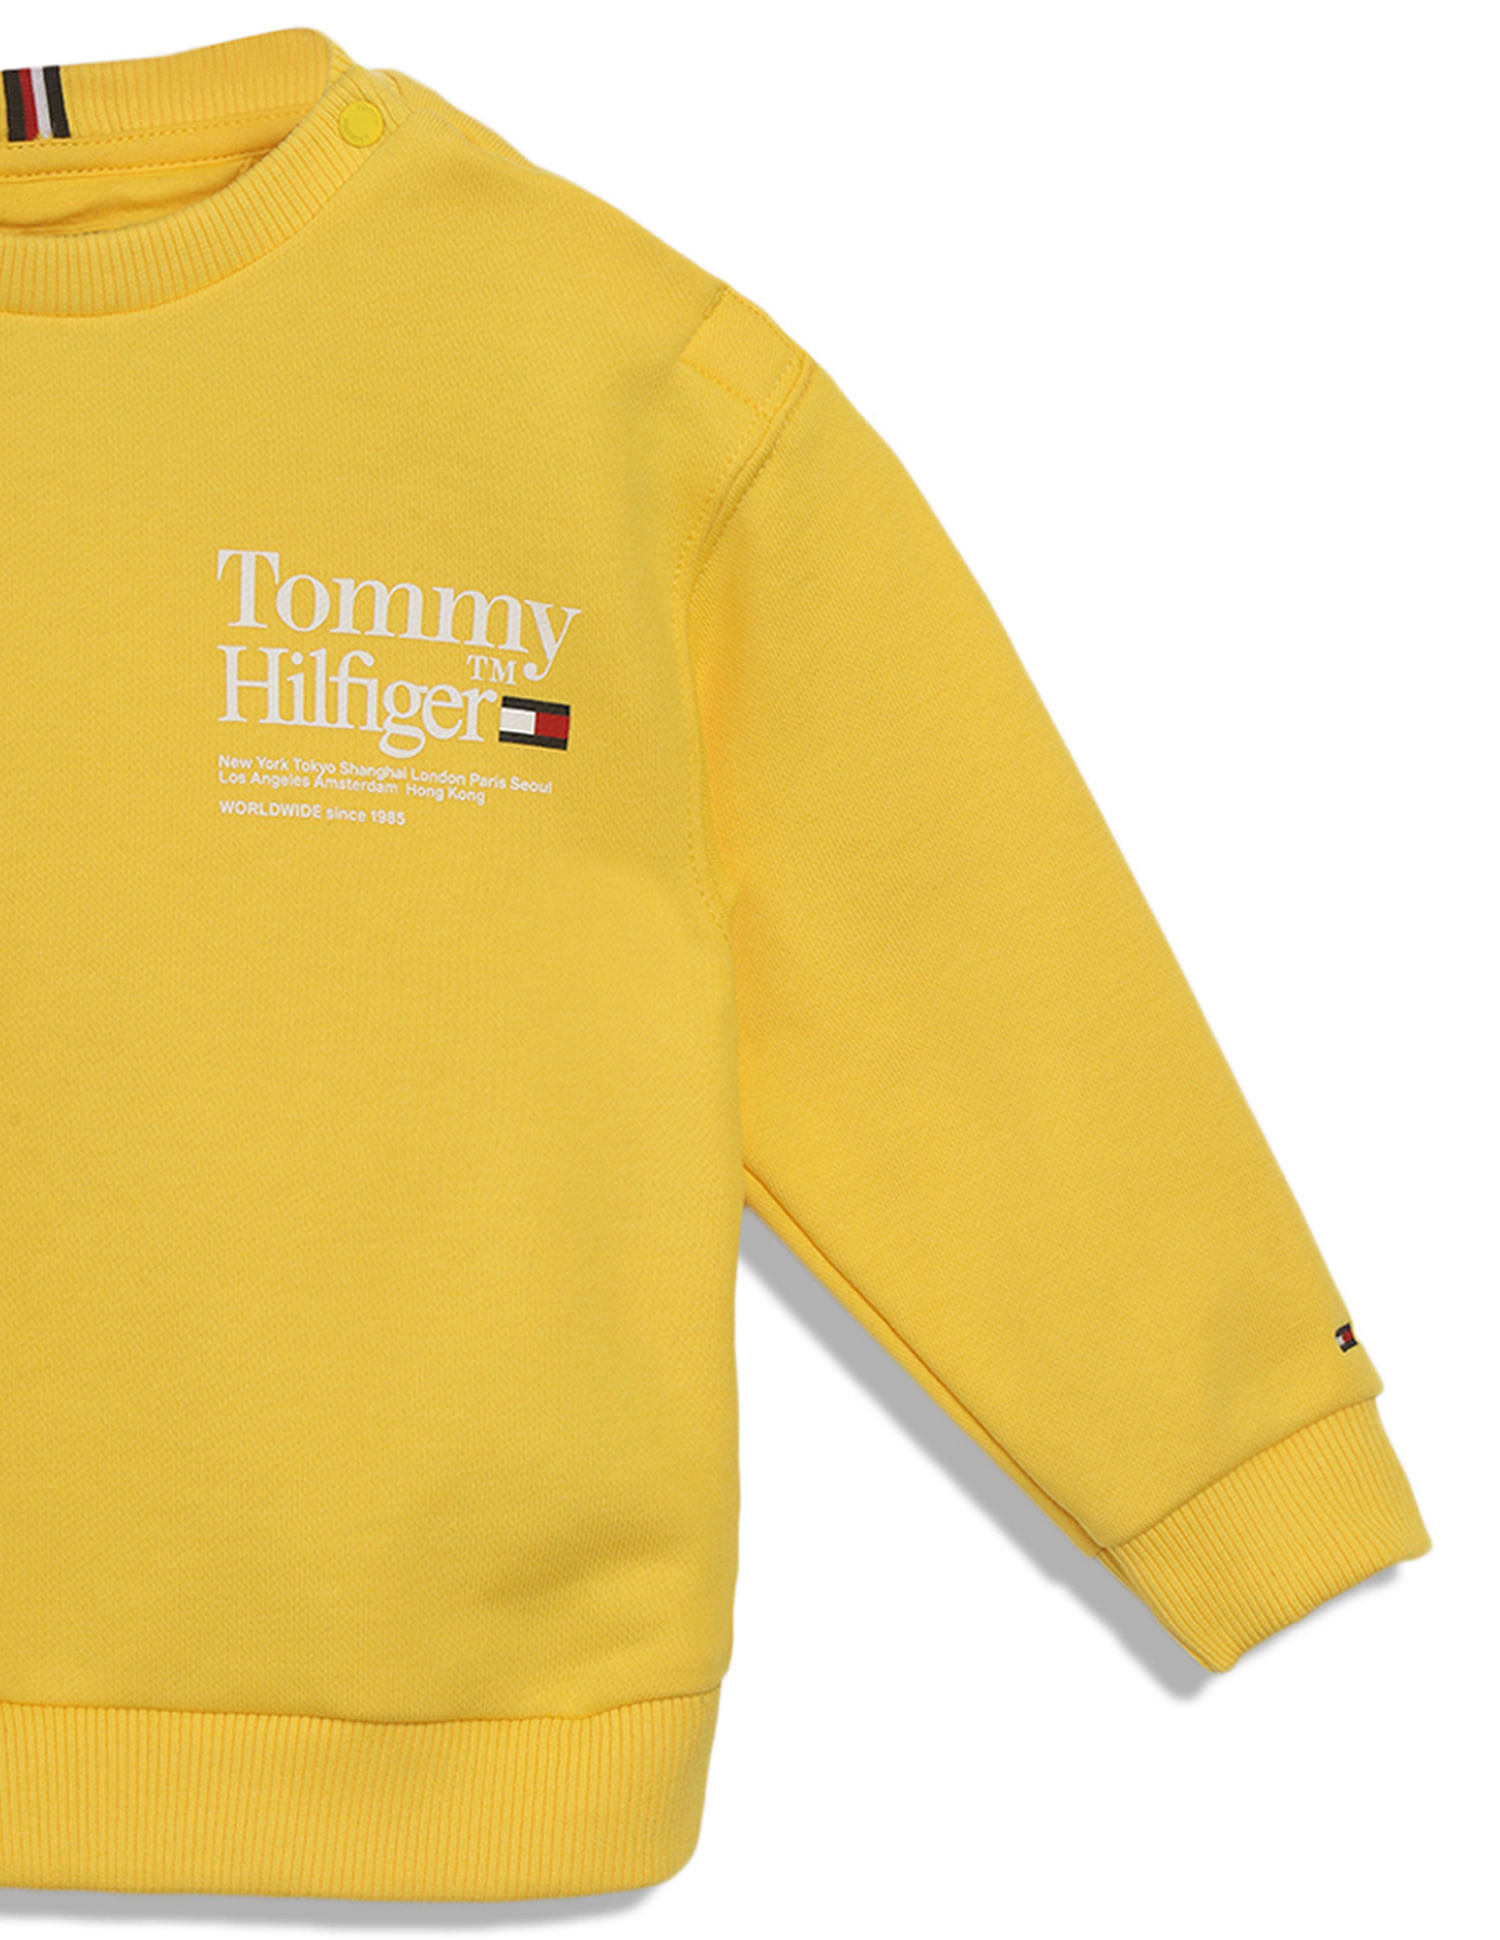 Buy Tommy Hilfiger Kids Boys Transitional Cotton Solid Sweatshirt